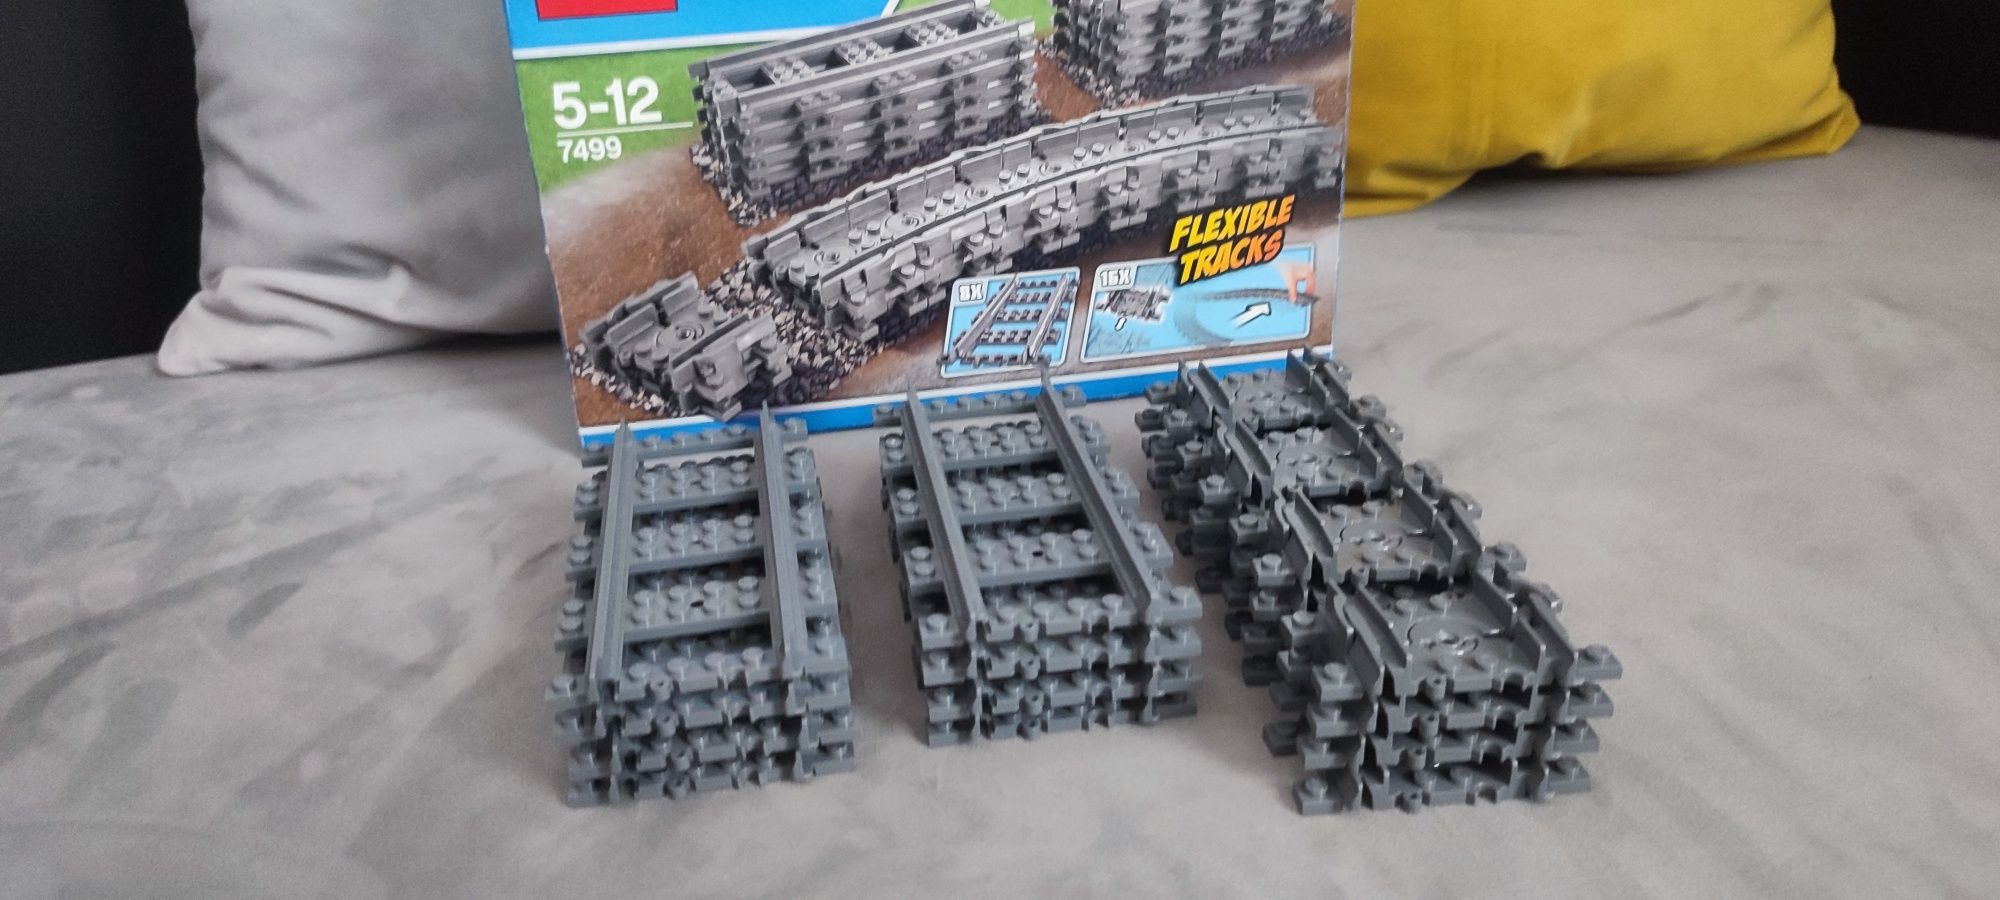 Lego City - Lego 7499 Elastyczne Tory